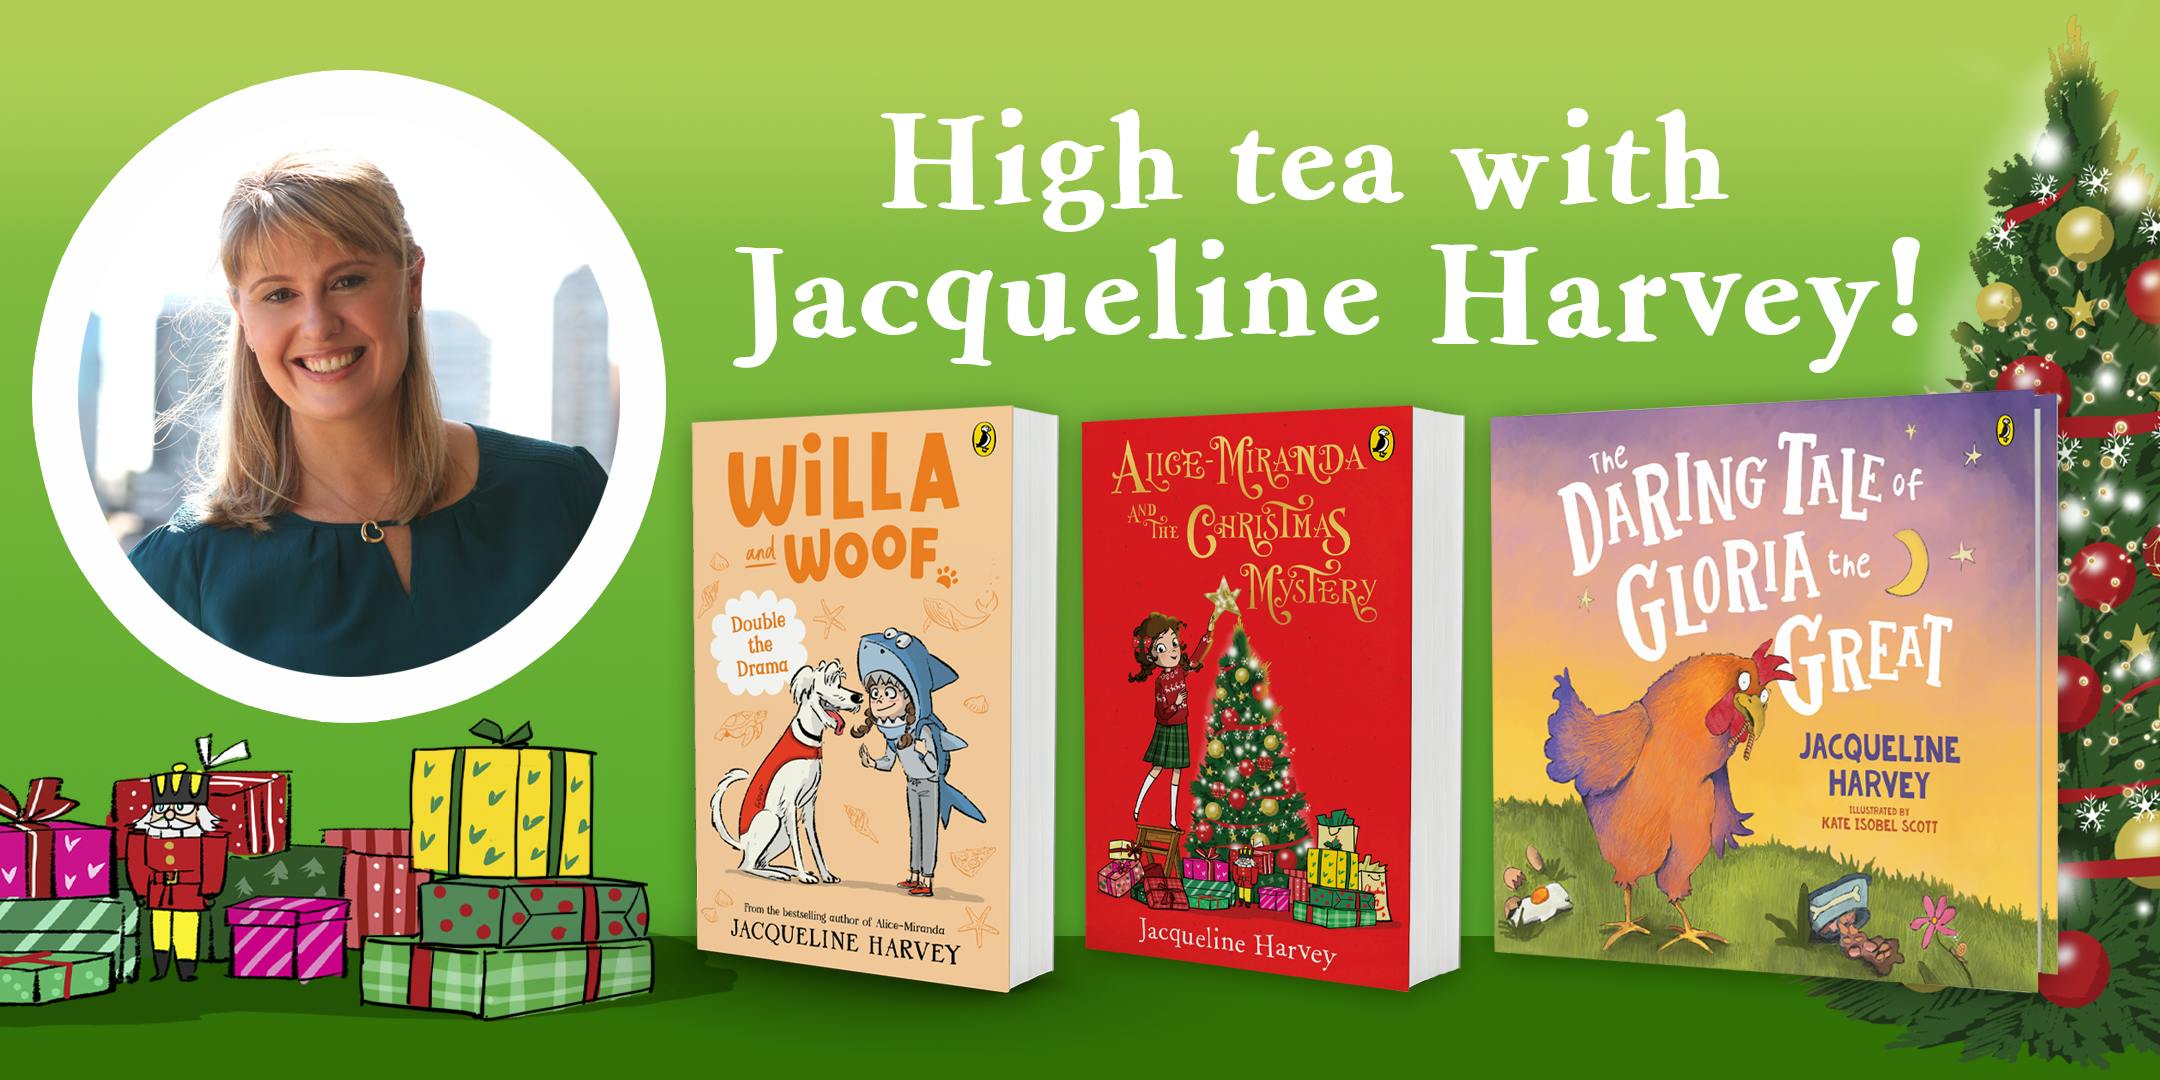 Join Jacqueline Harvey for high tea